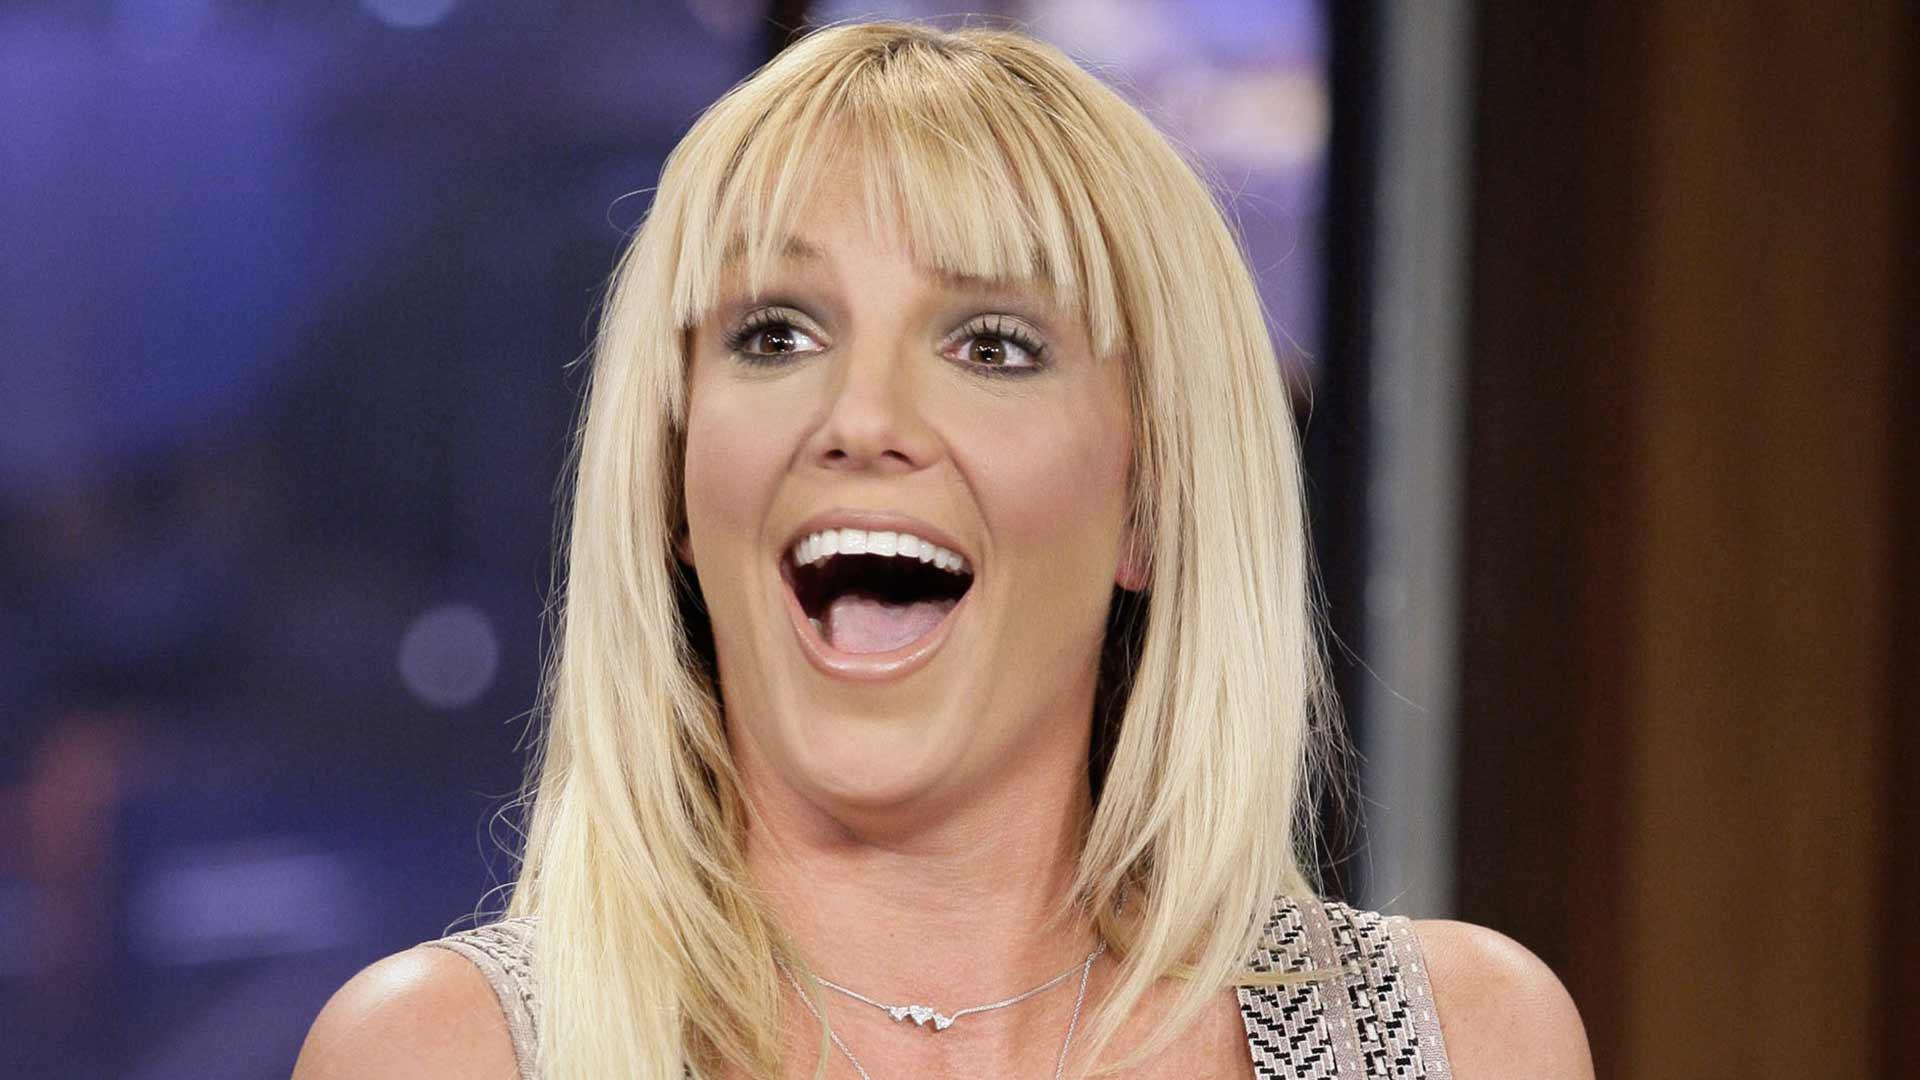 Britney Spears: Oops… I Did Wear Those $6k Christian Louboutin Heels